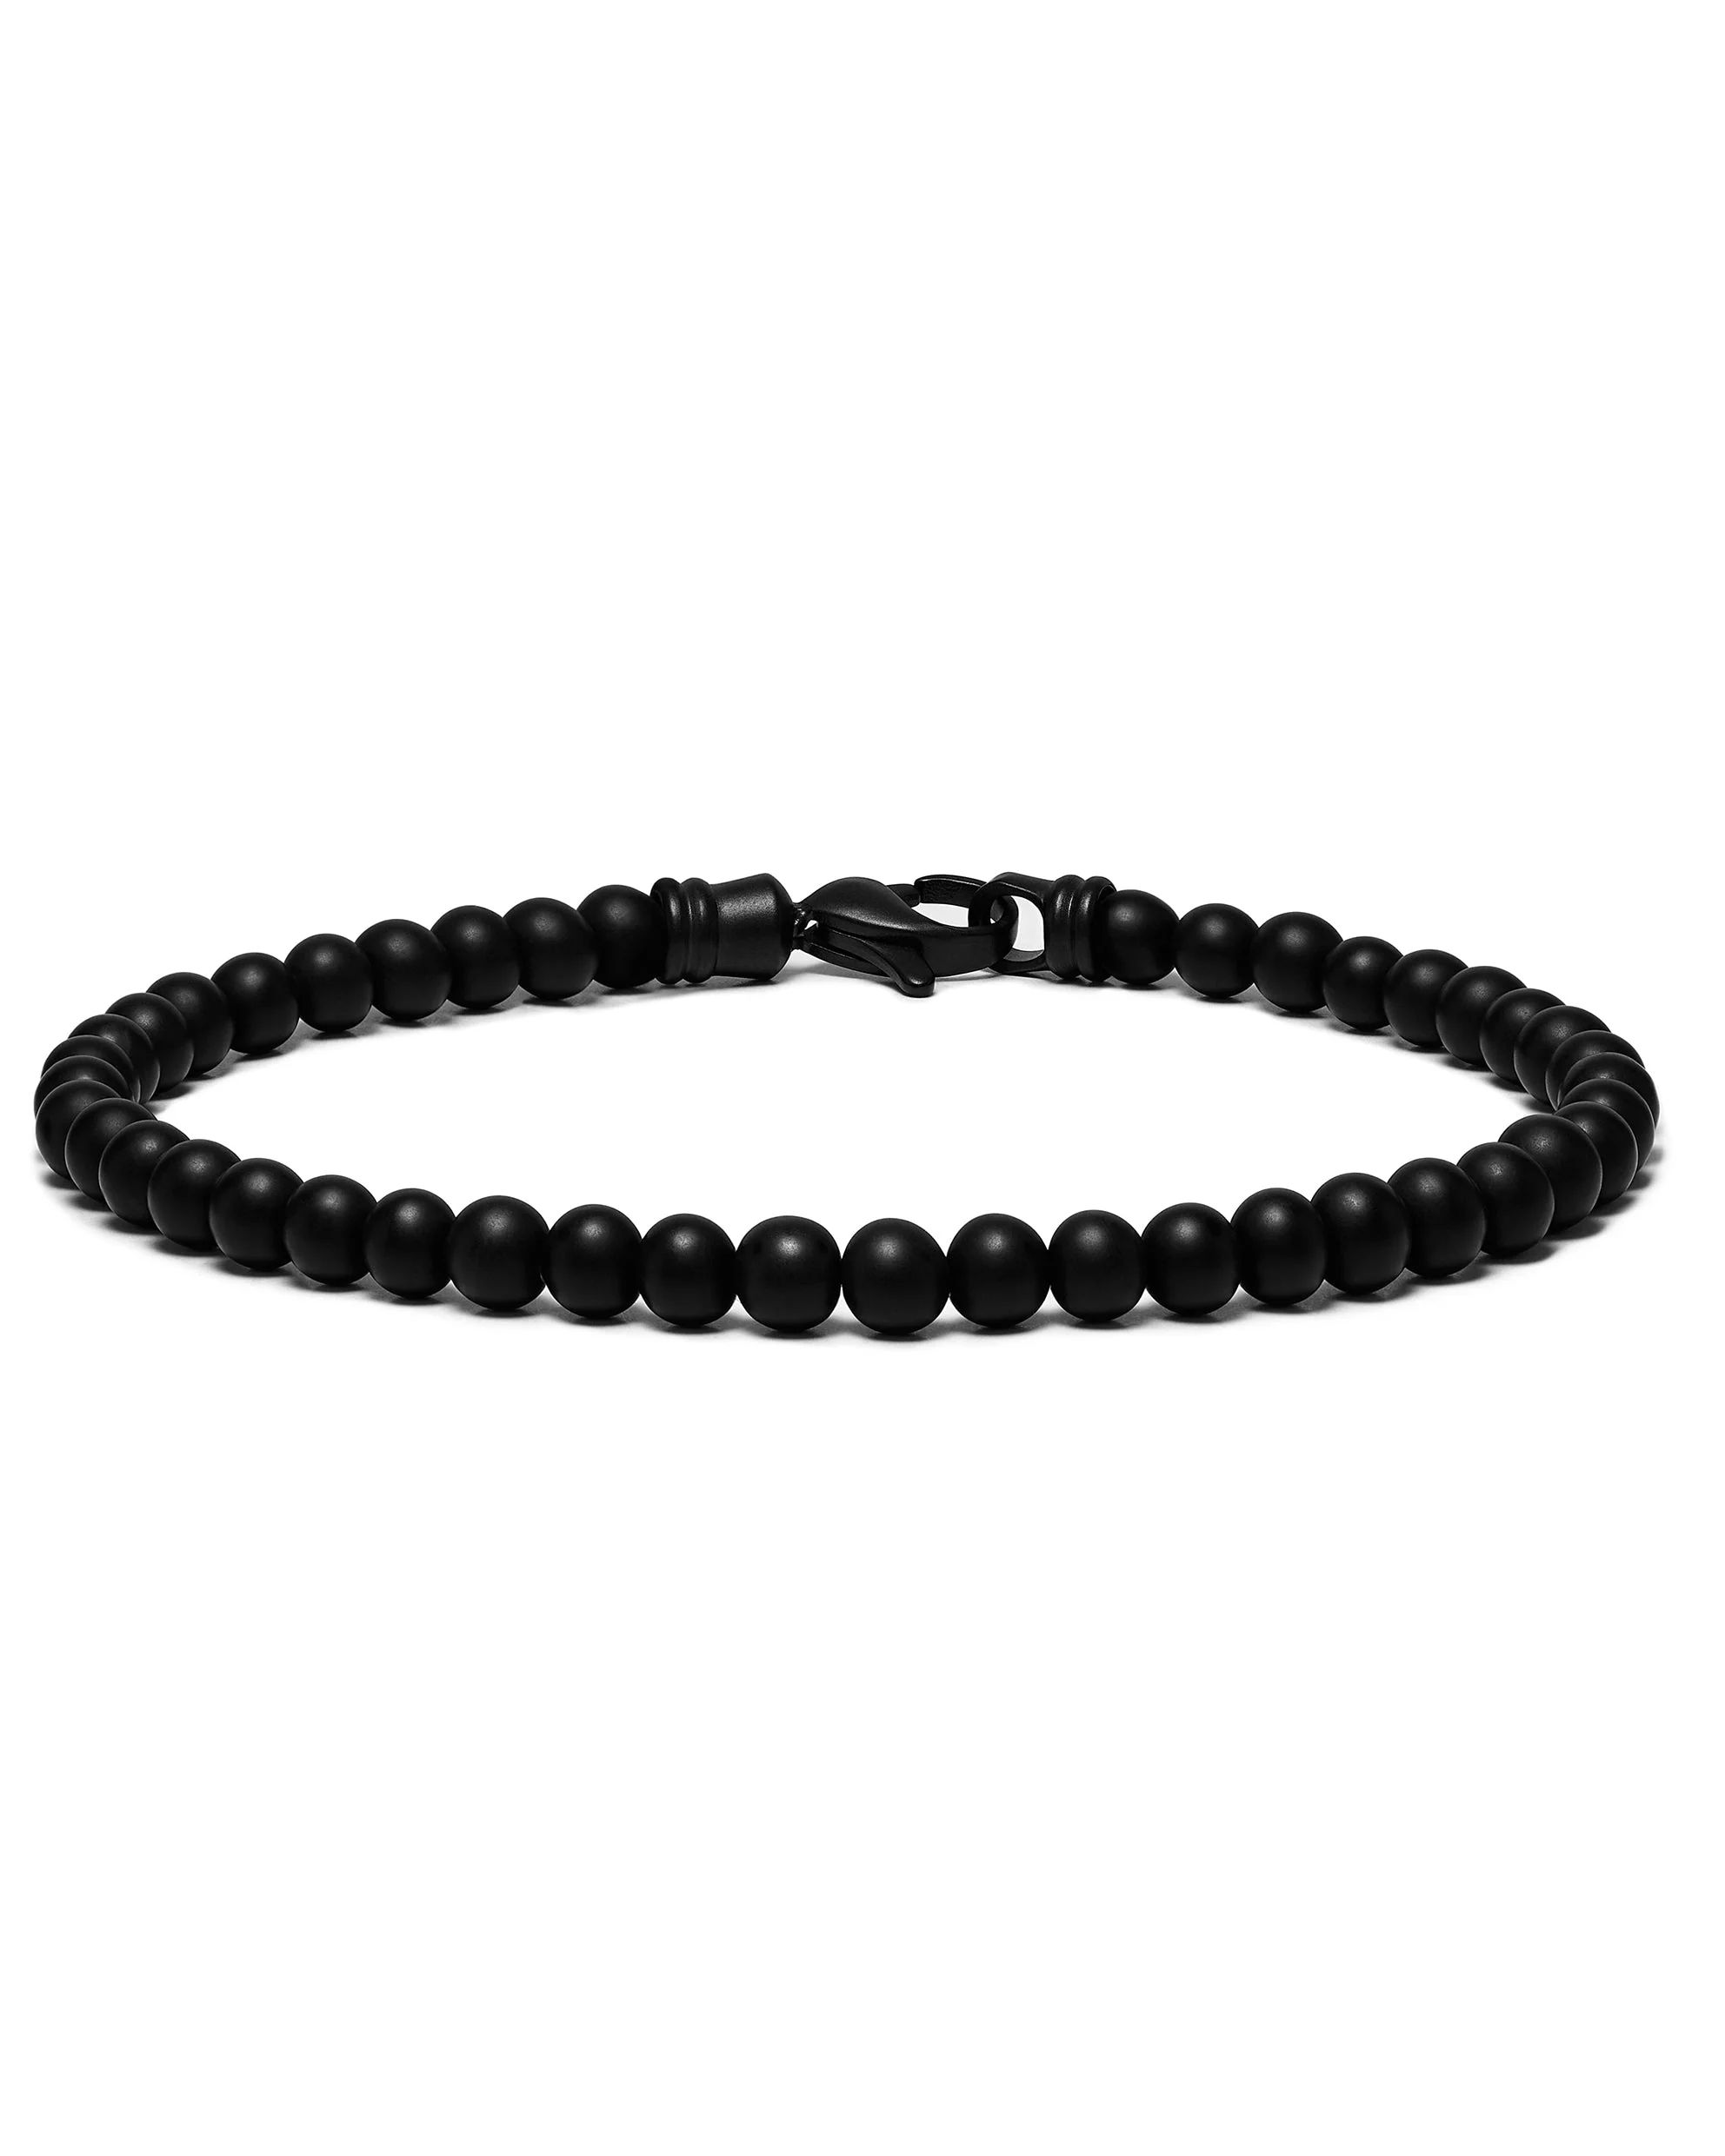 Spiritual Bead Bracelet, 4MM - Black Onyx | Jewelry Affairs